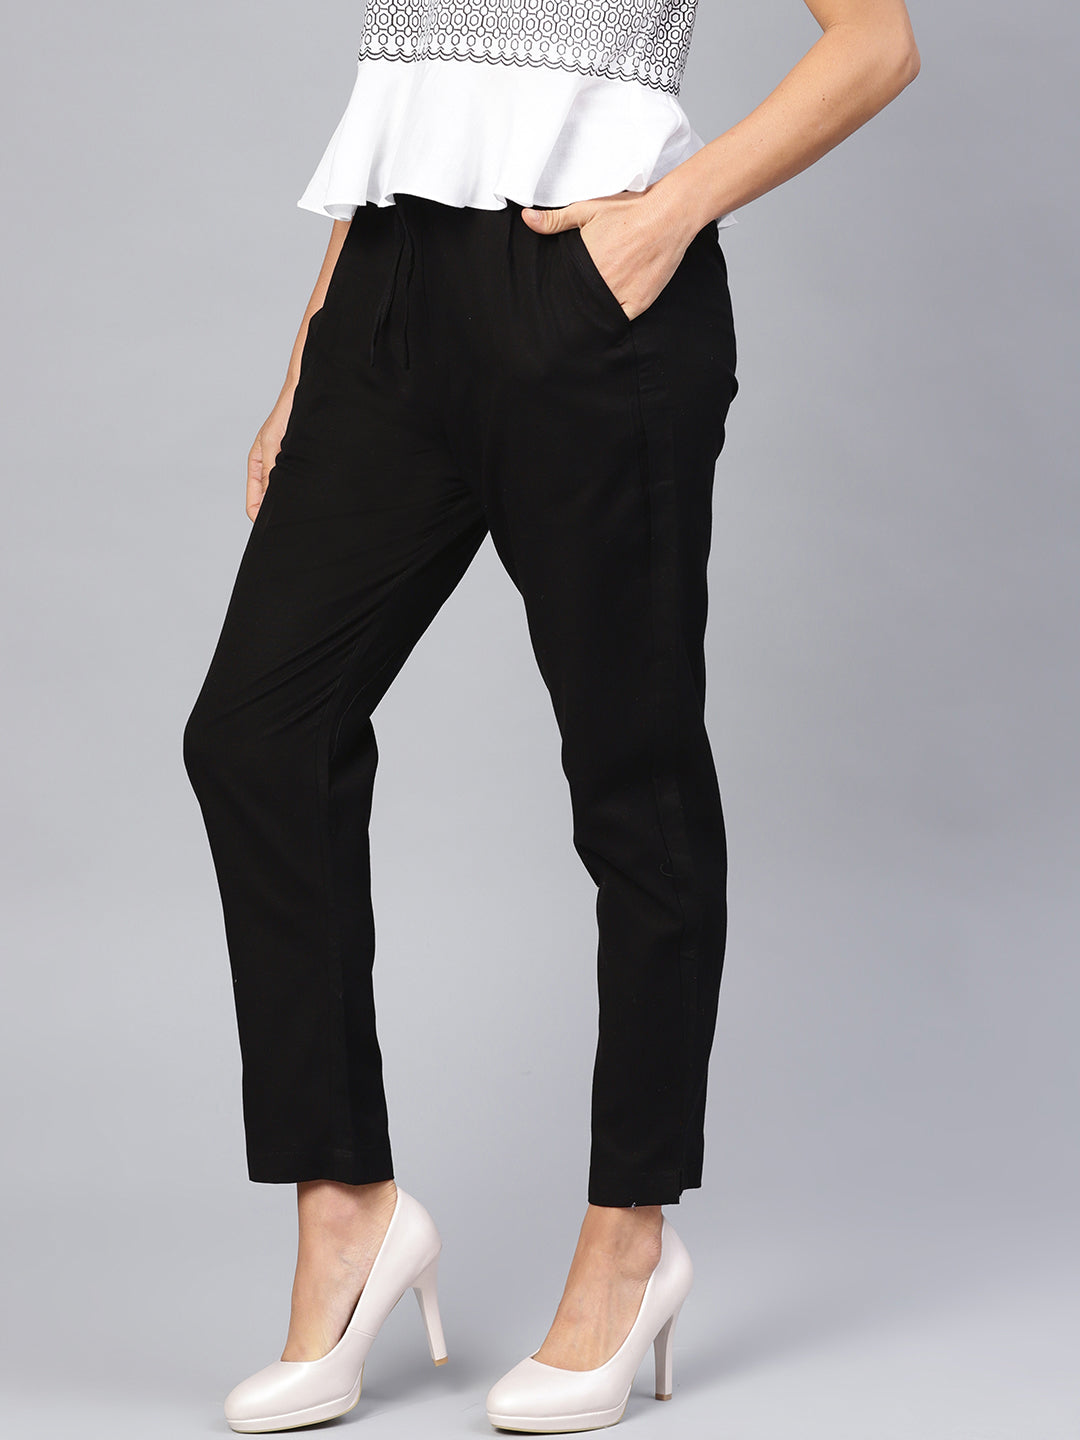 Myshka Women's Black Cotton Solid Trouser